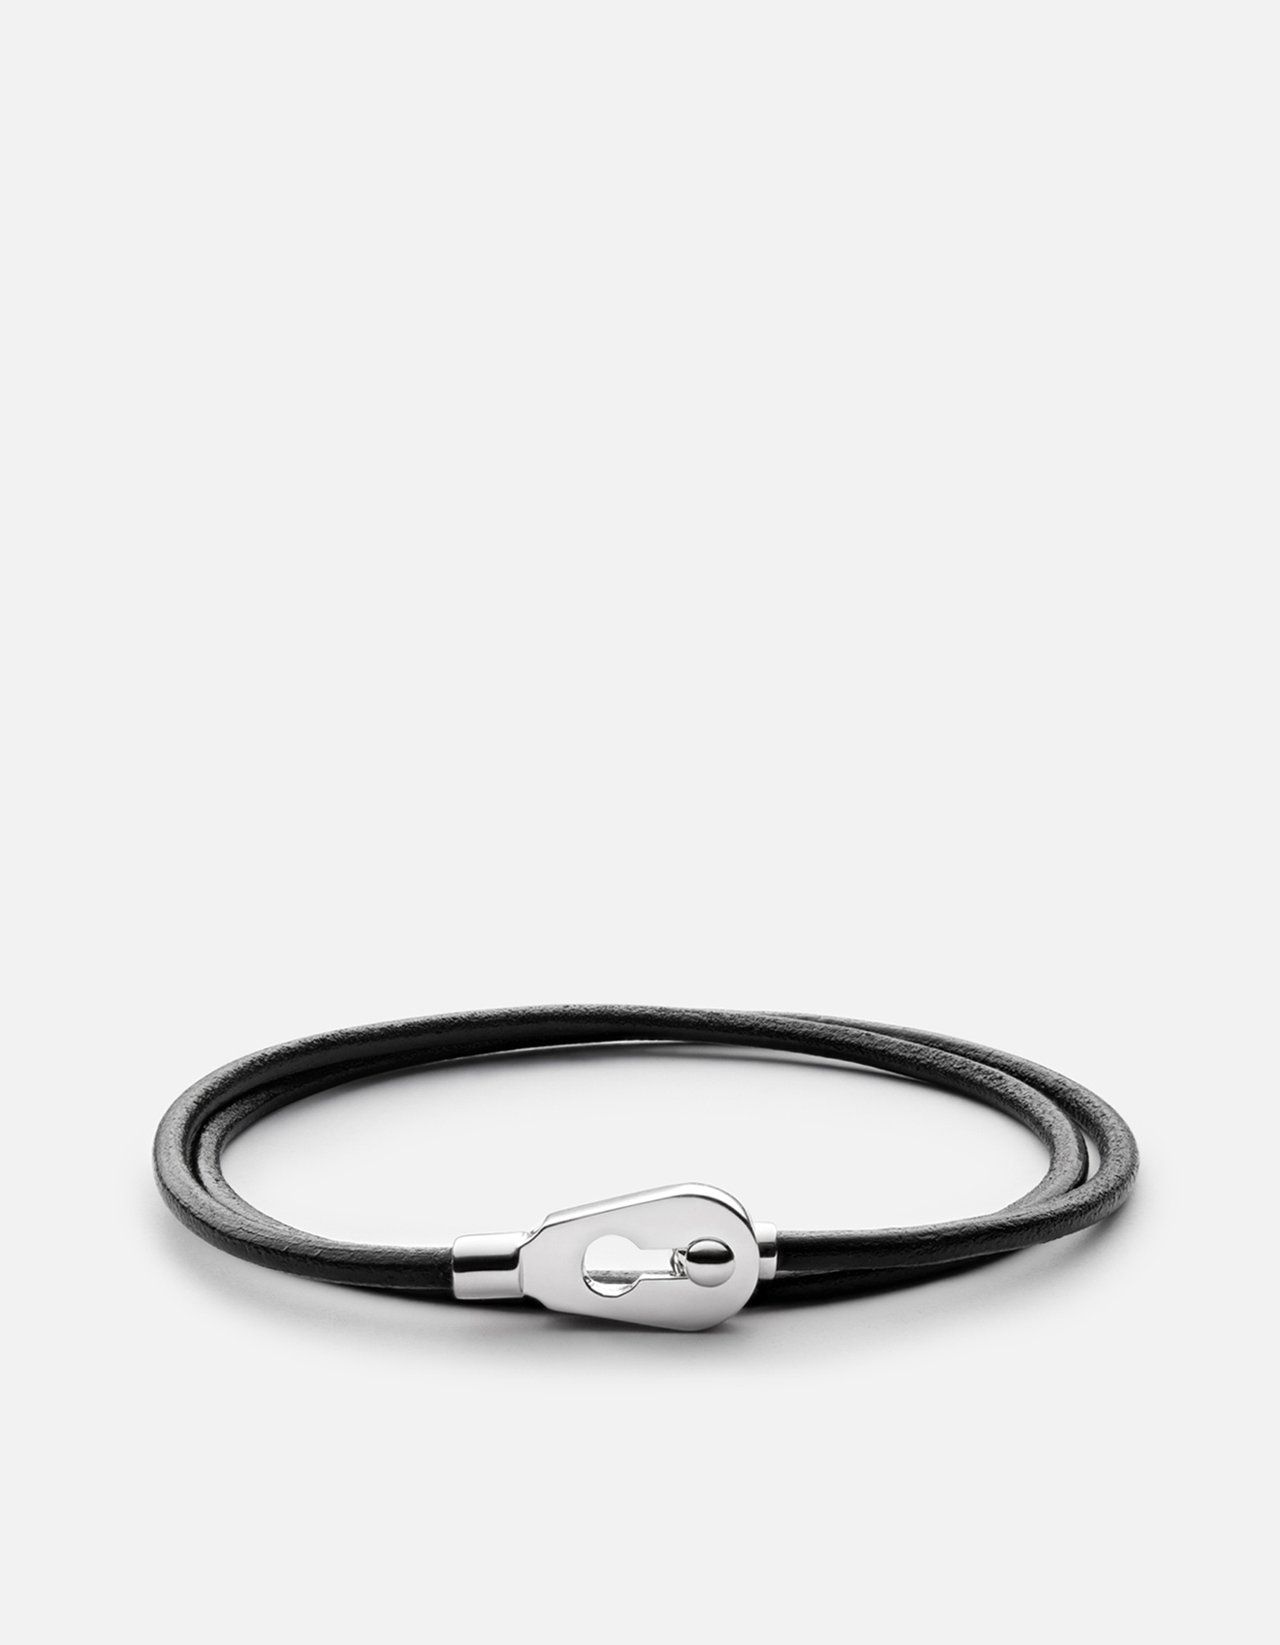 Miansai Centra Leather Wrap Bracelet